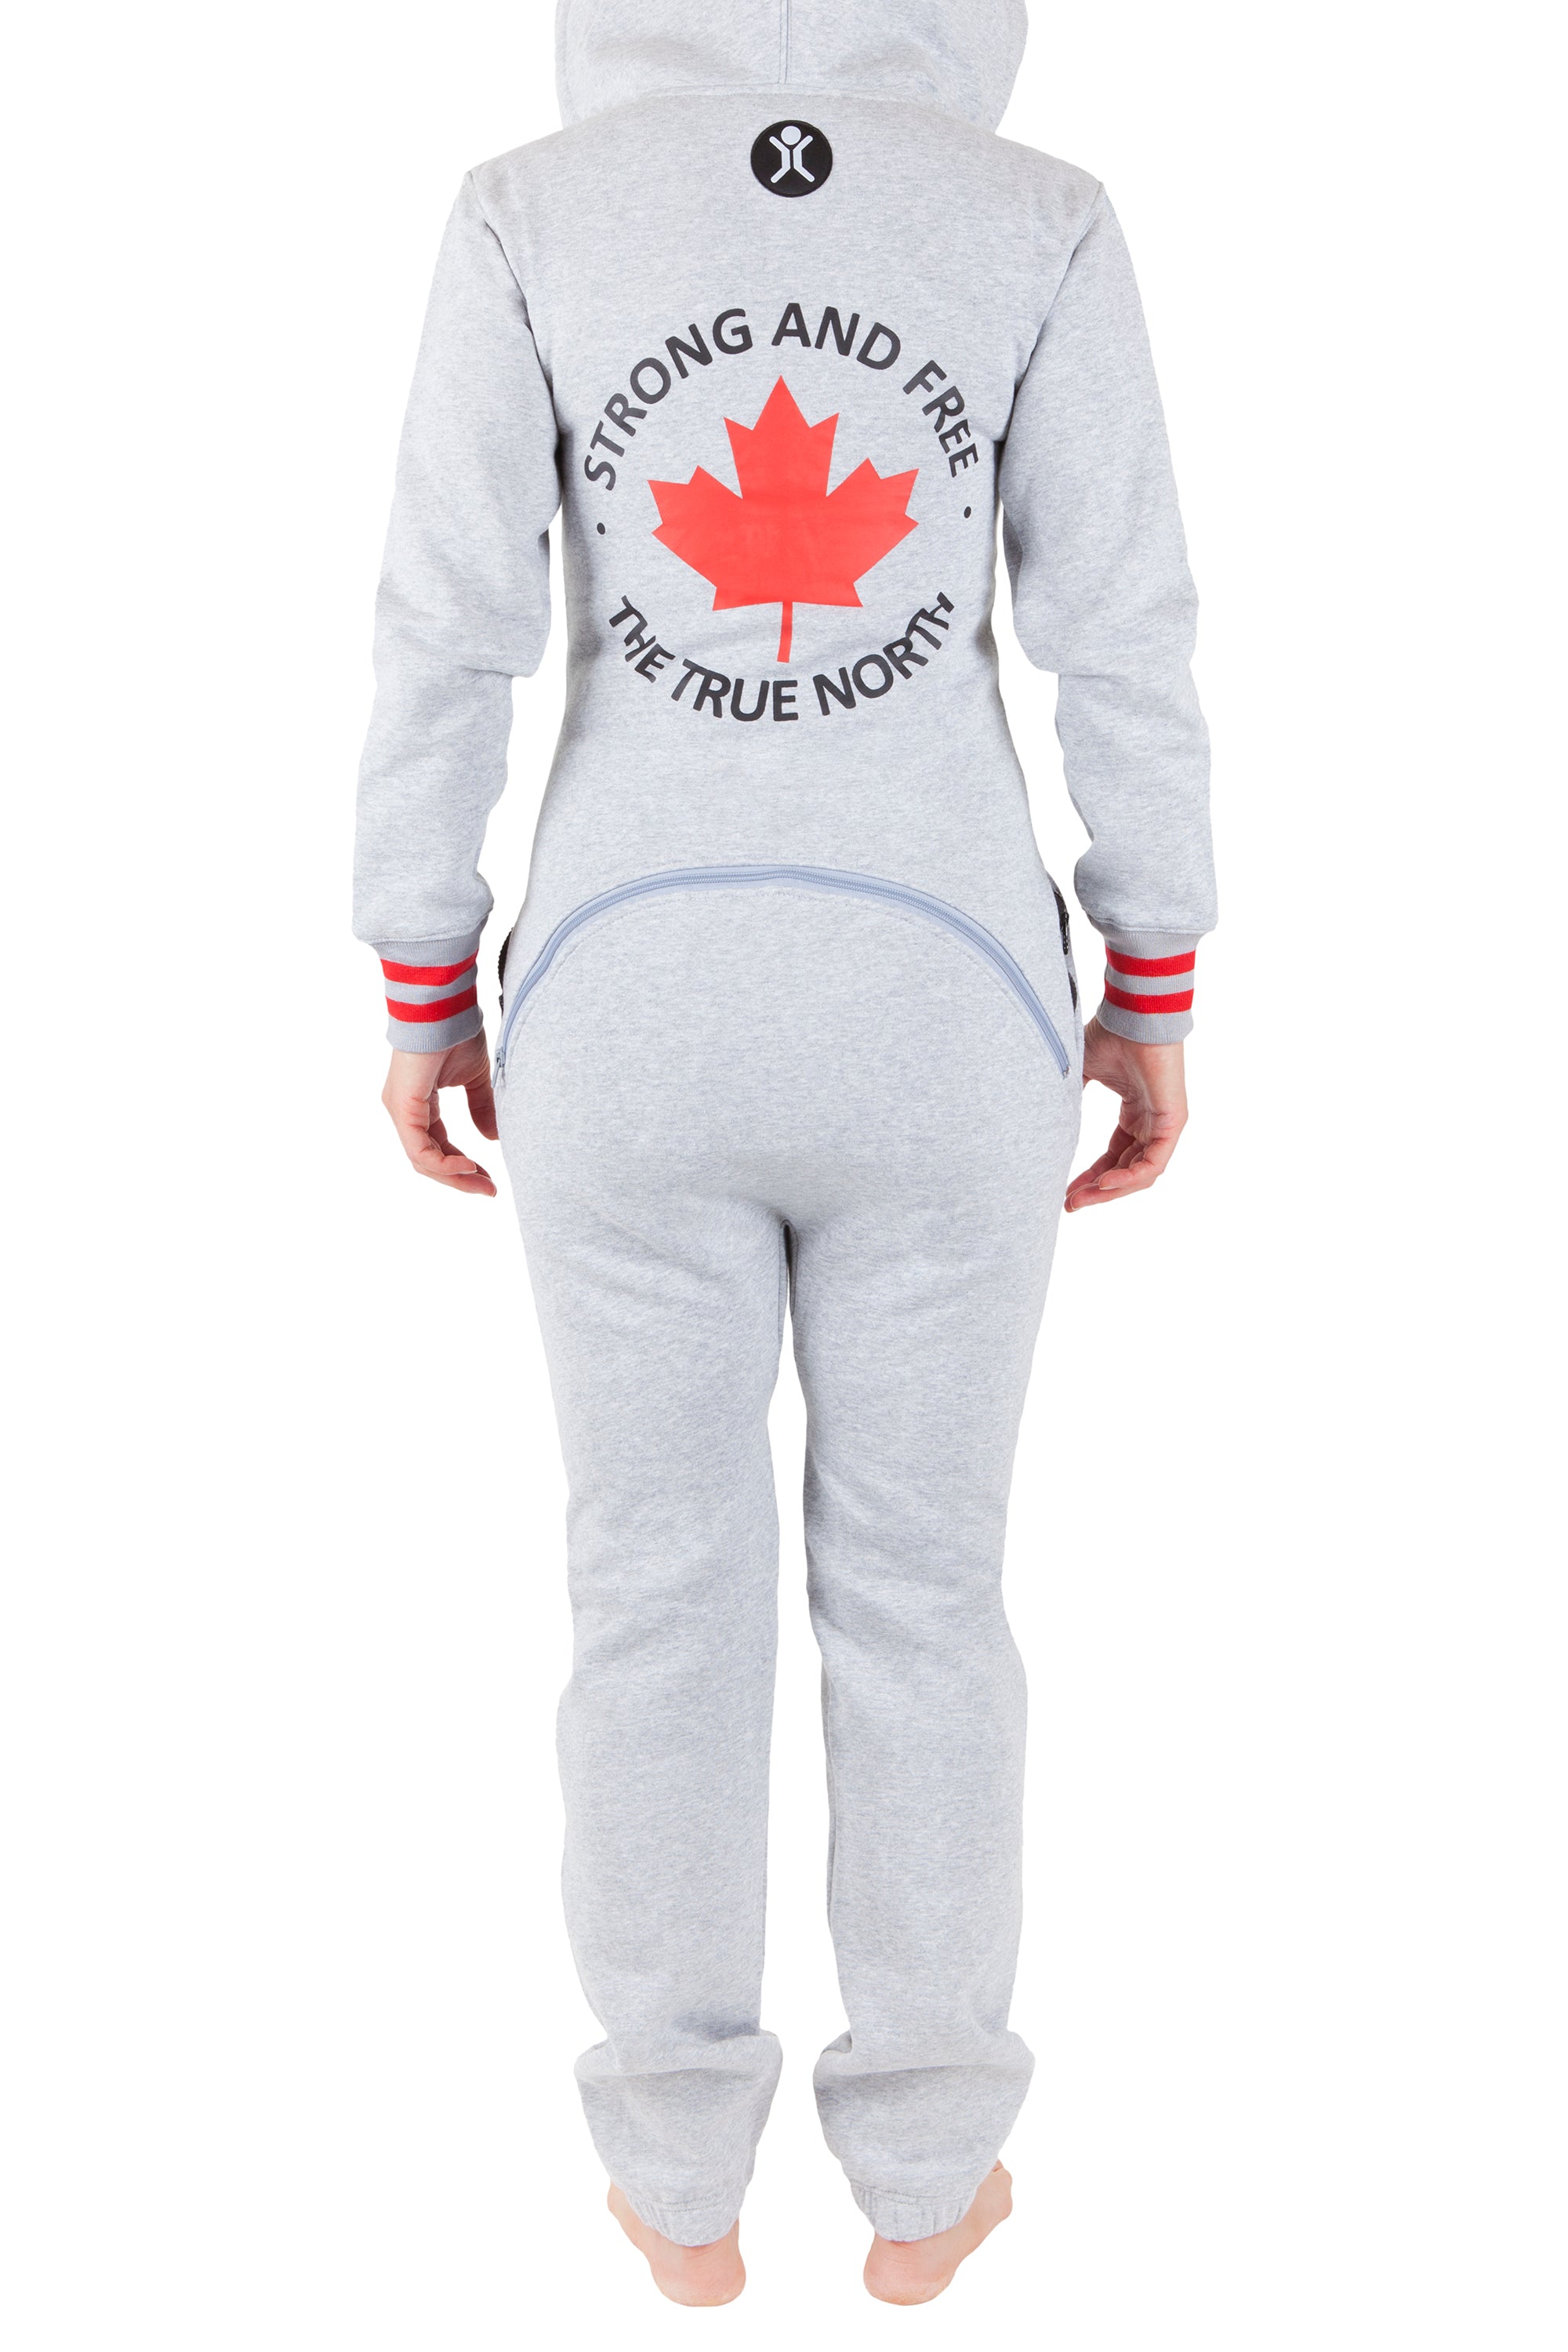 Adult Onesies Pajama -  Canada